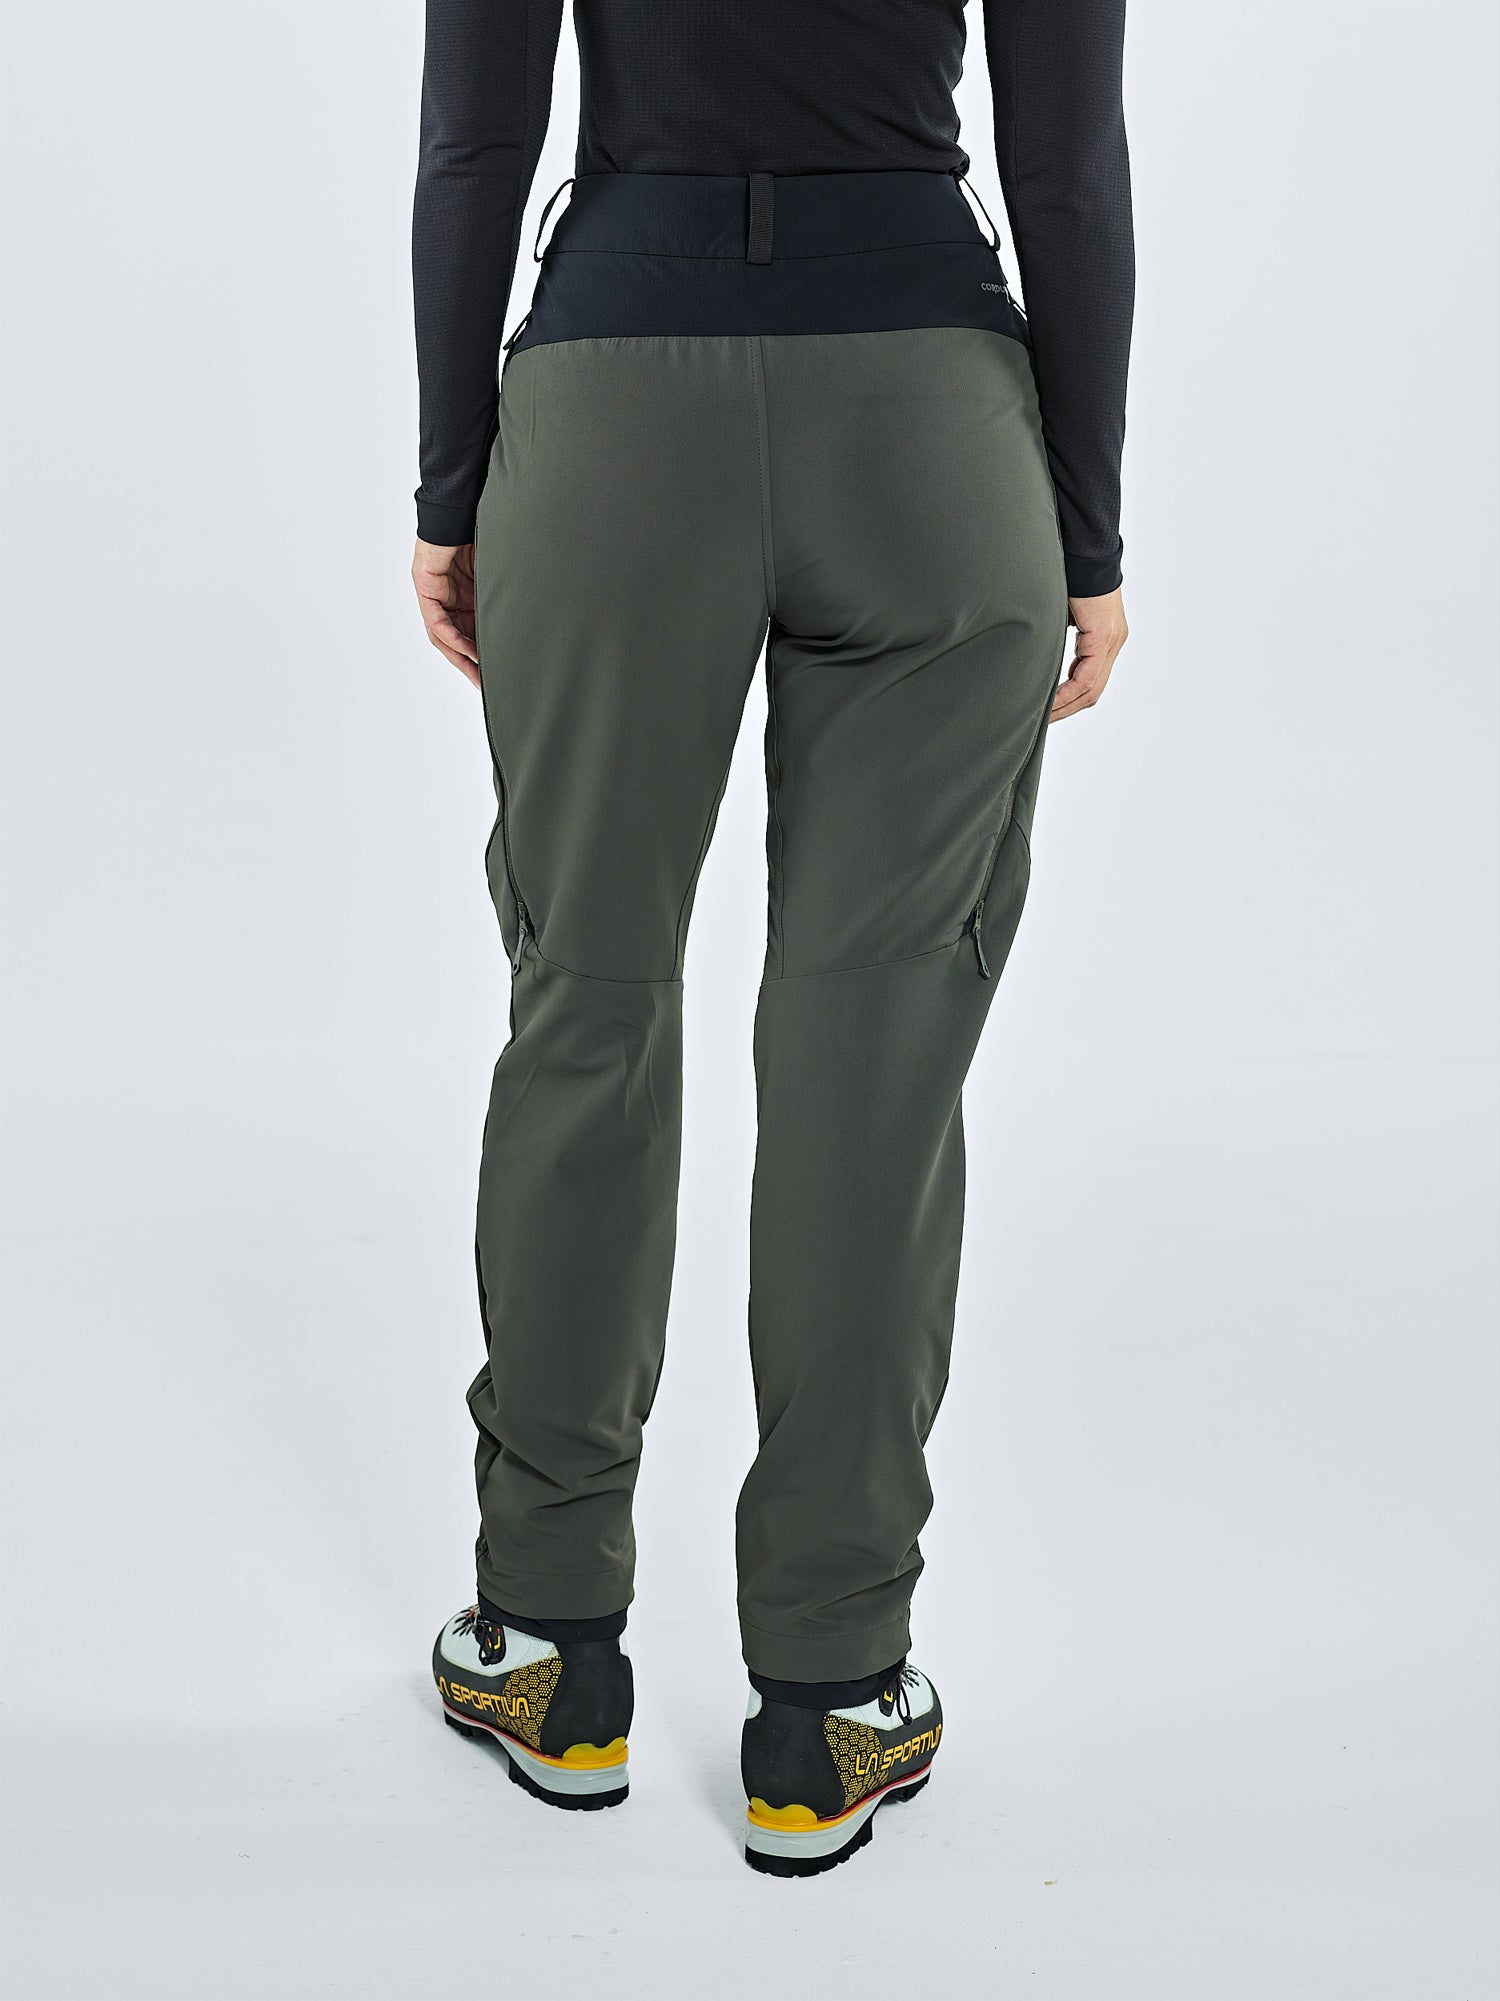 Safort Women's 30 34 Inseam Regular Tall Hiking Athletic Pants